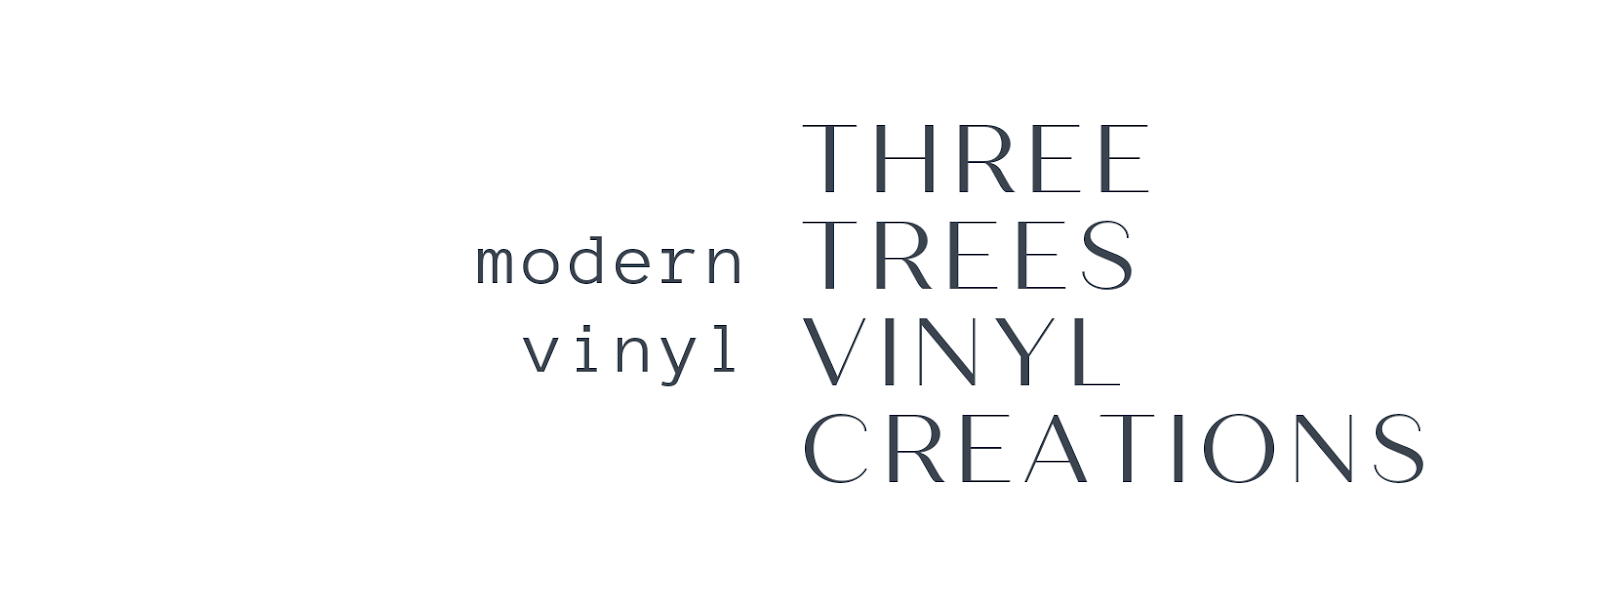 three trees vinyl creations